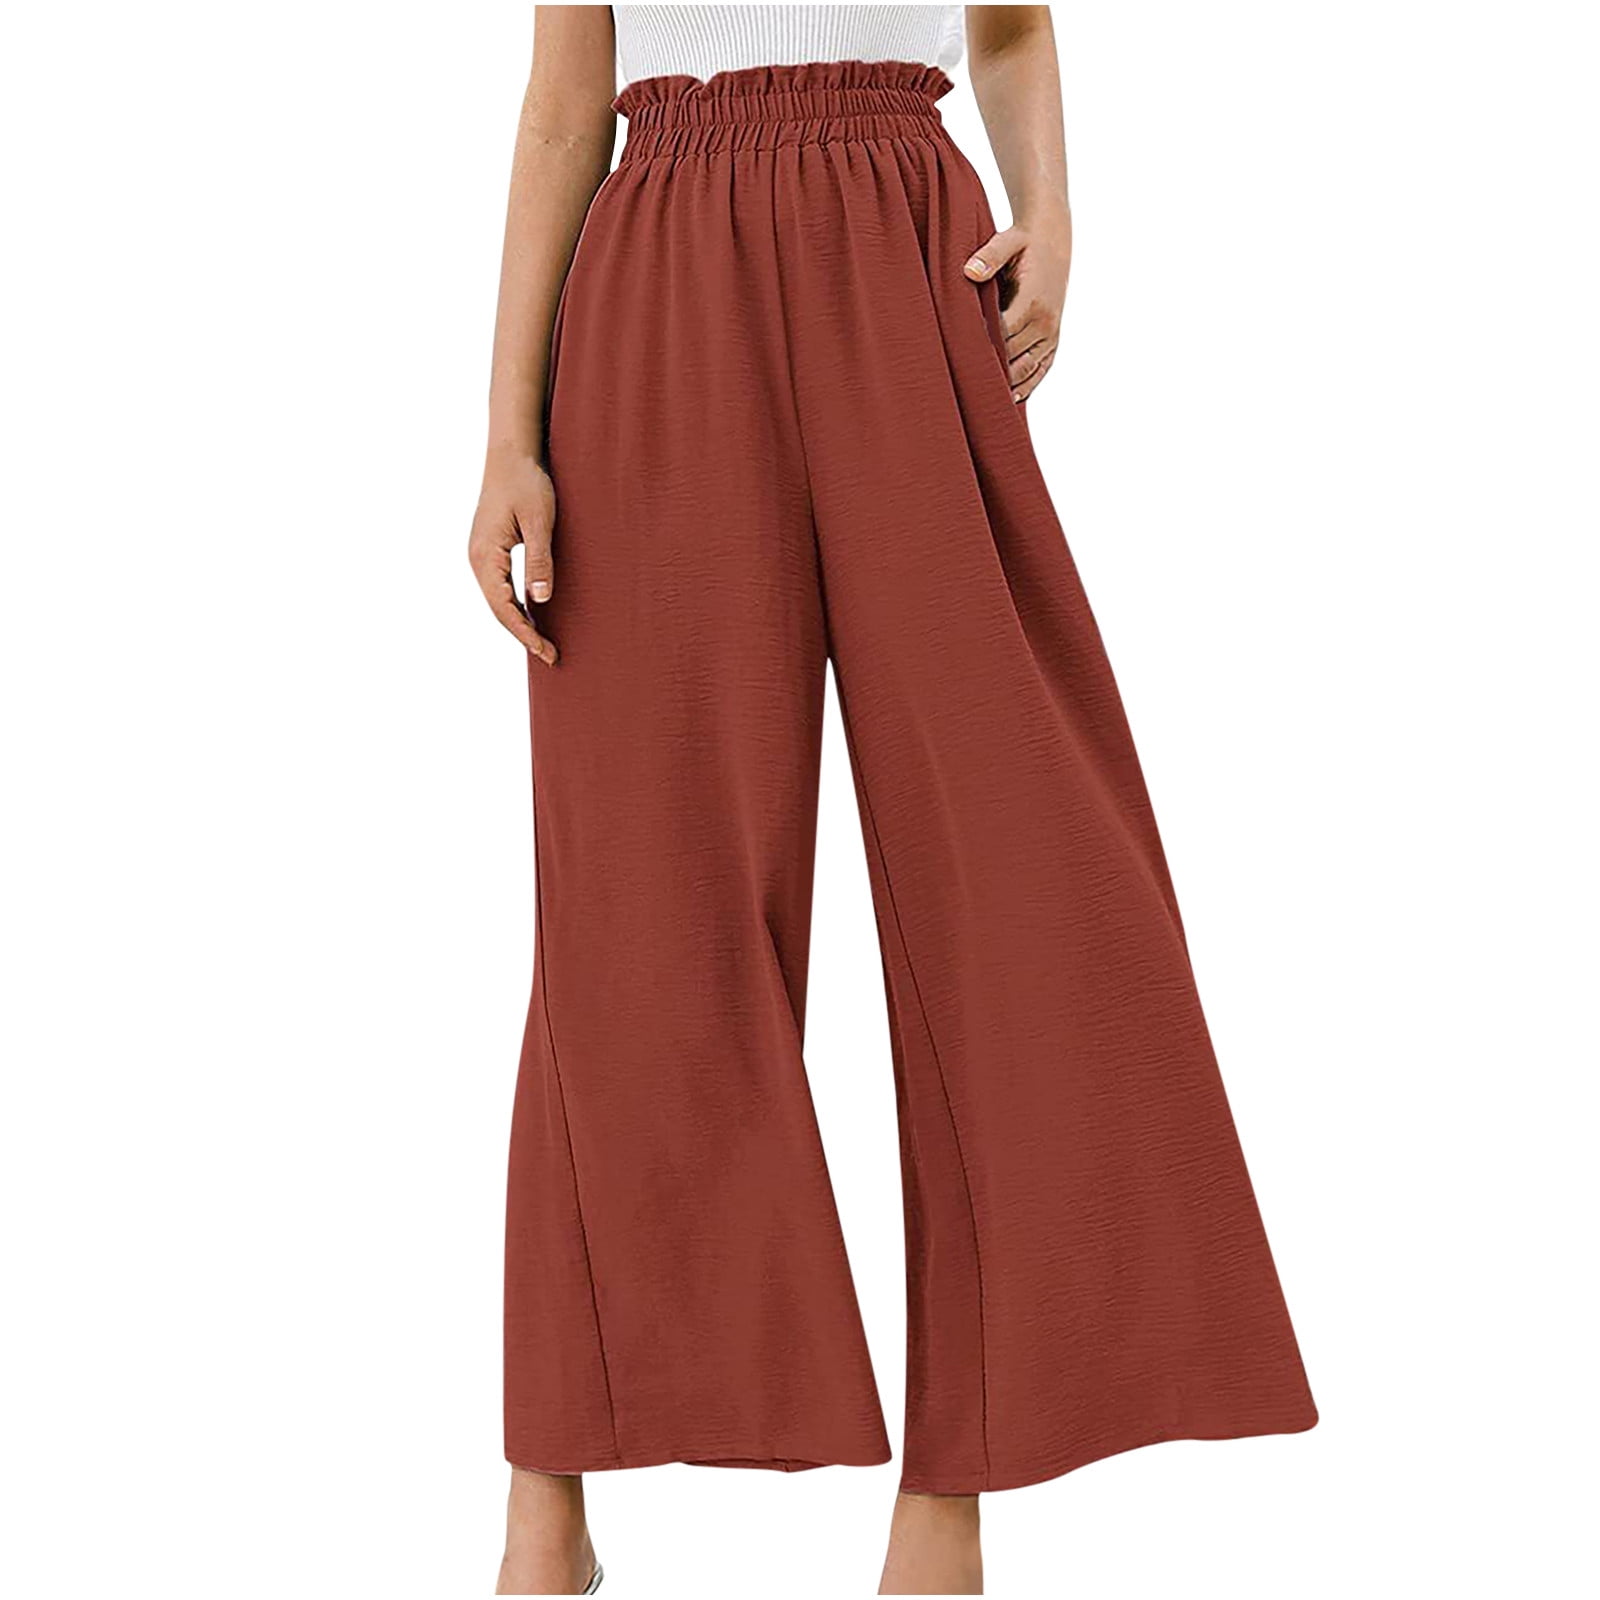 Bianstore Women's Cotton Linen Palazzo Pants Flowy Wide Leg Elastic Waist  Summer Beach Pants Trousers(Apricot-XS) at  Women's Clothing store